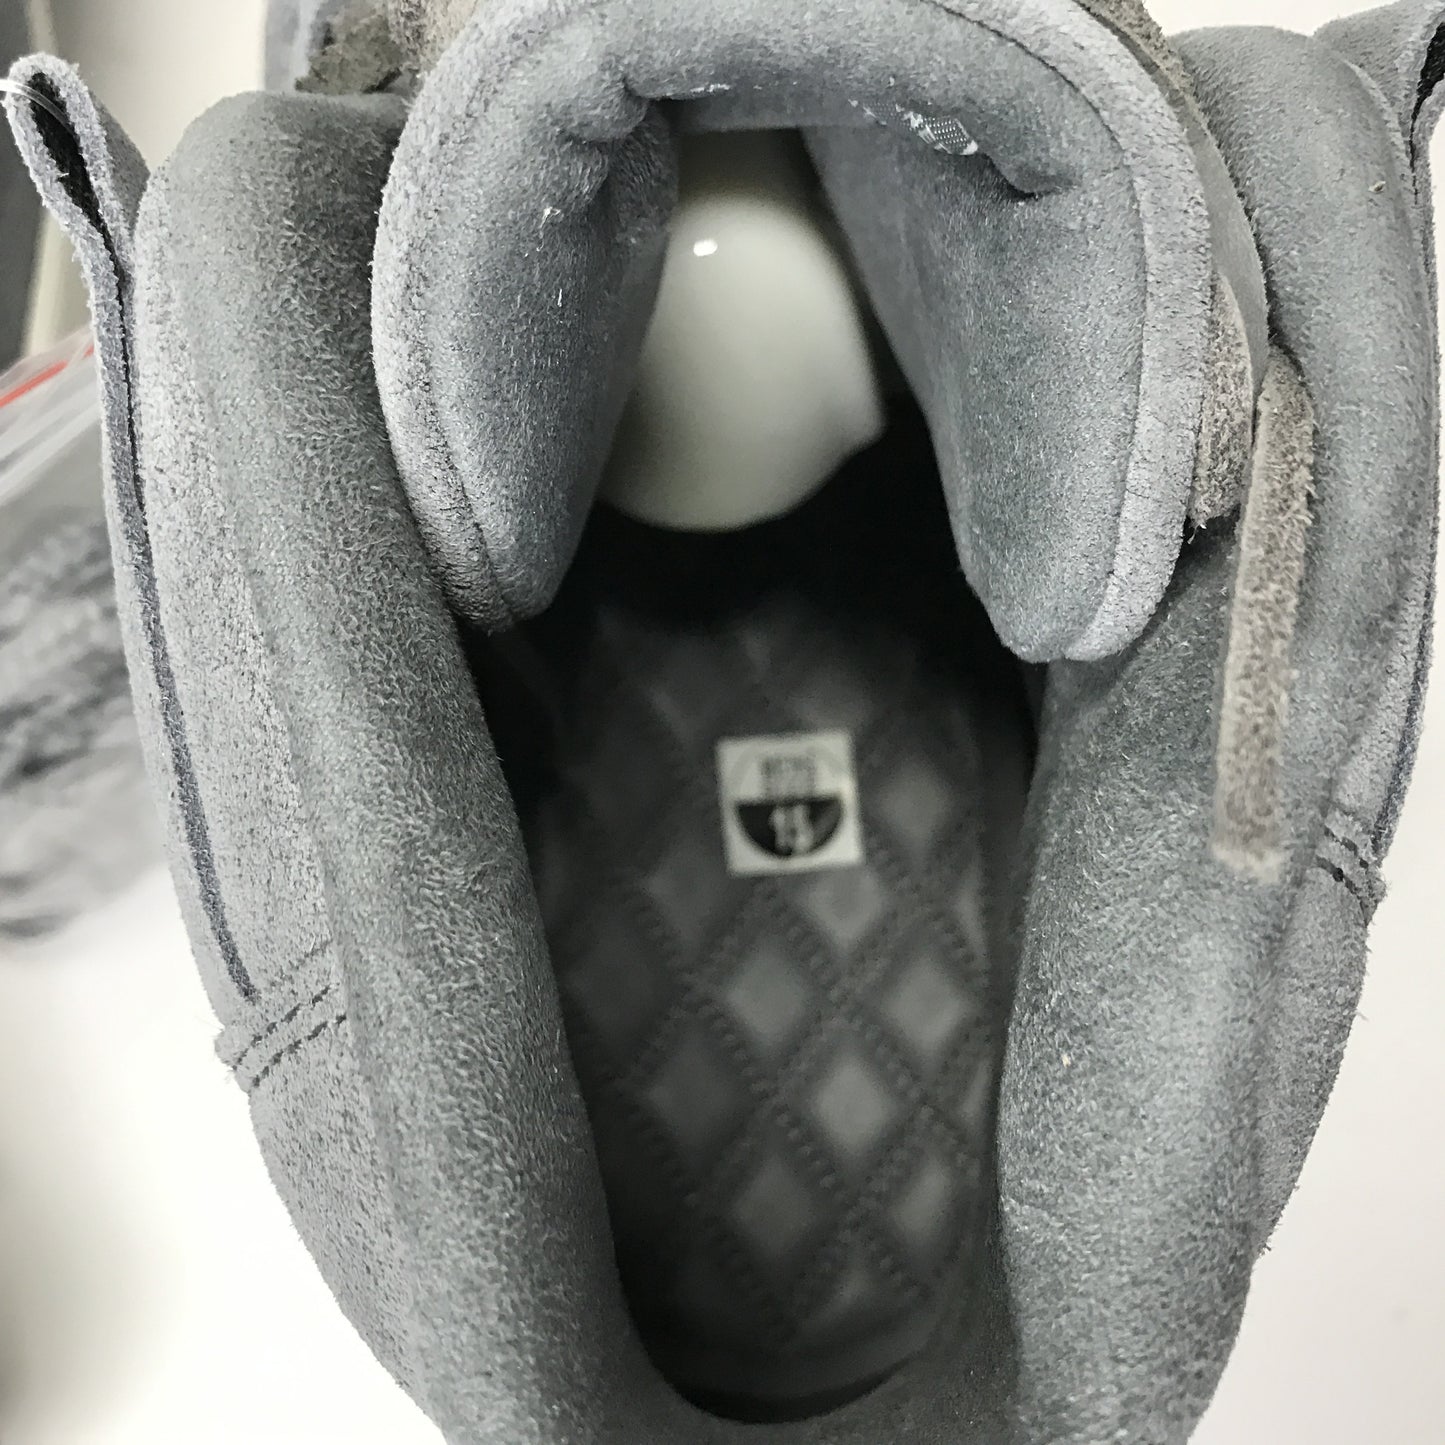 DS Nike Air Jordan 11 XI Retro Prem Pinnacle Gris Suede Taille 15